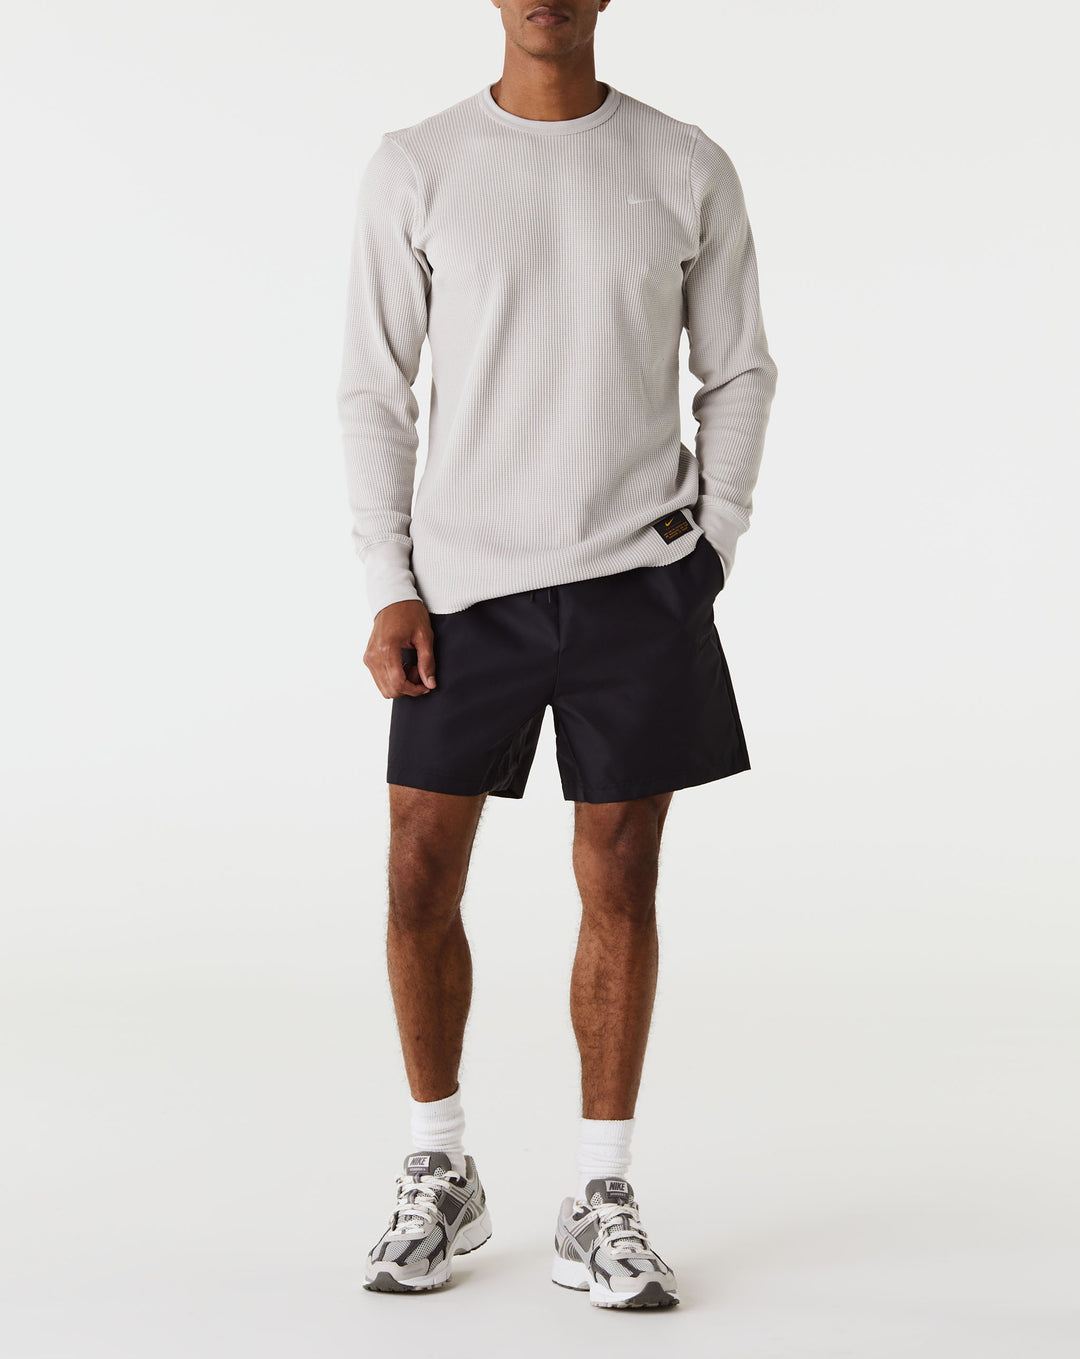 Nike Femmes Grey Tights & Leggings  - Cheap Urlfreeze Jordan outlet